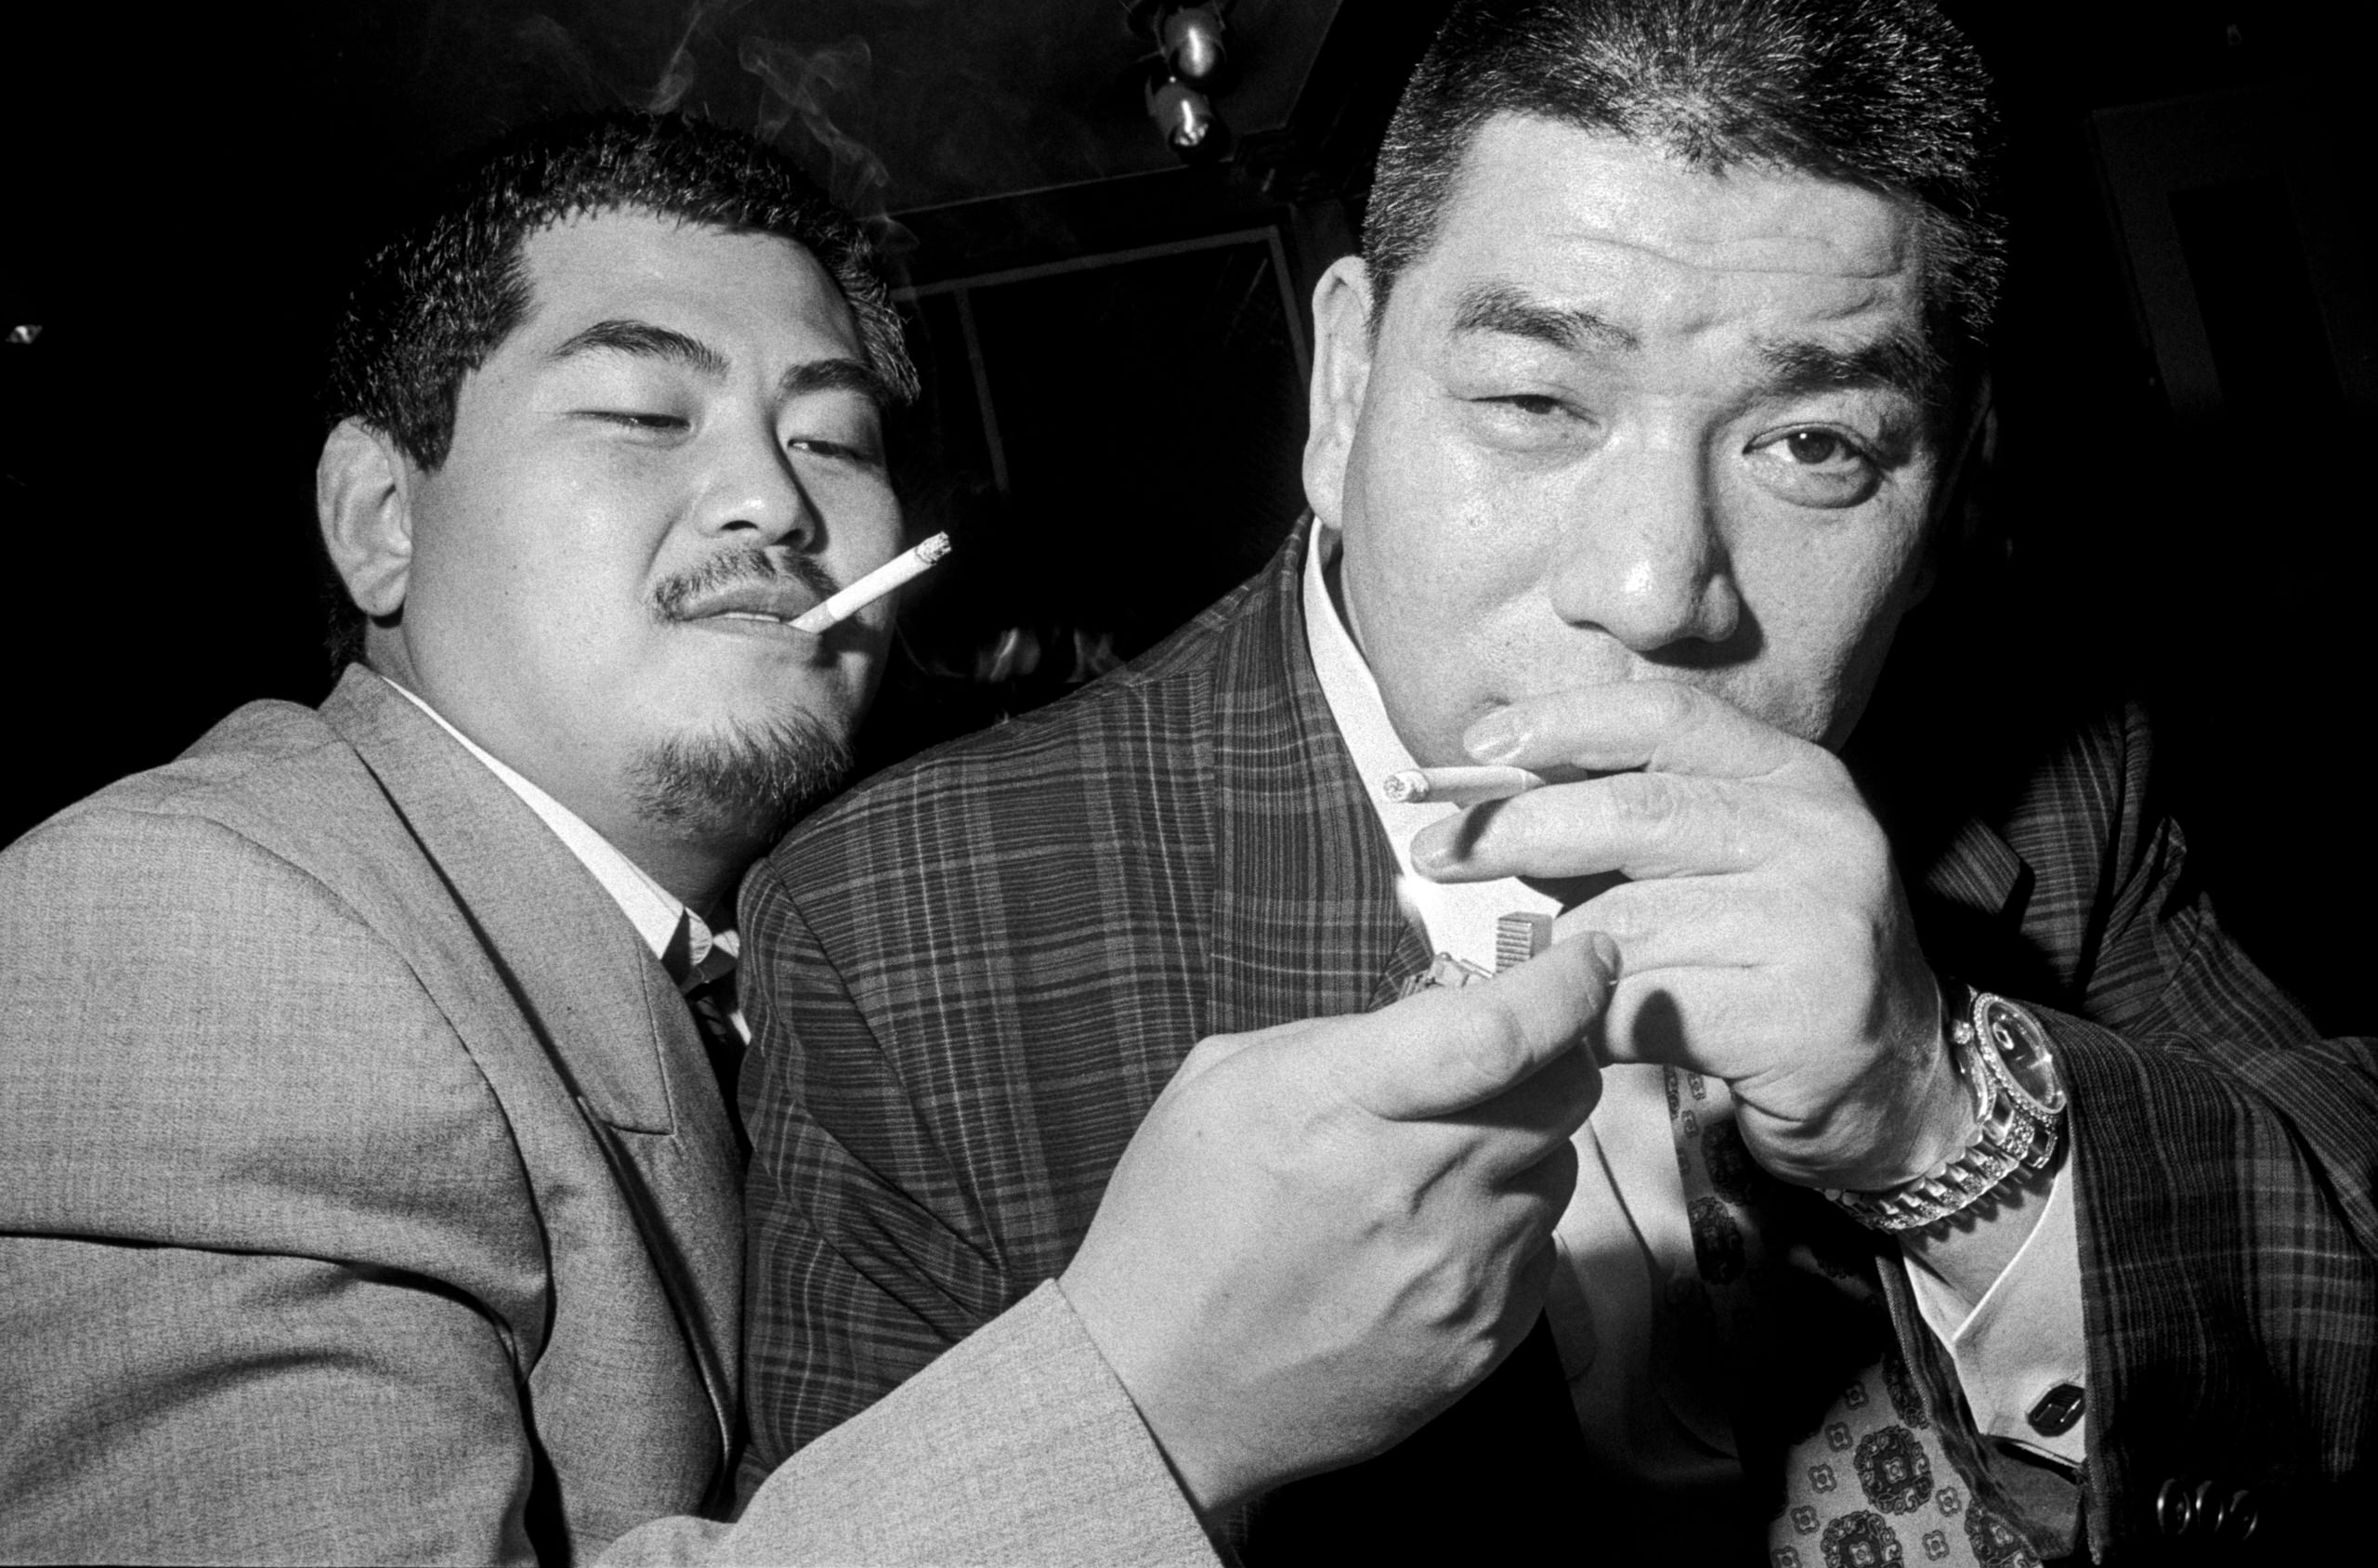 JAPAN.  Asakusa.  1998.  Two members of the Yakuza, Japan's mafia.